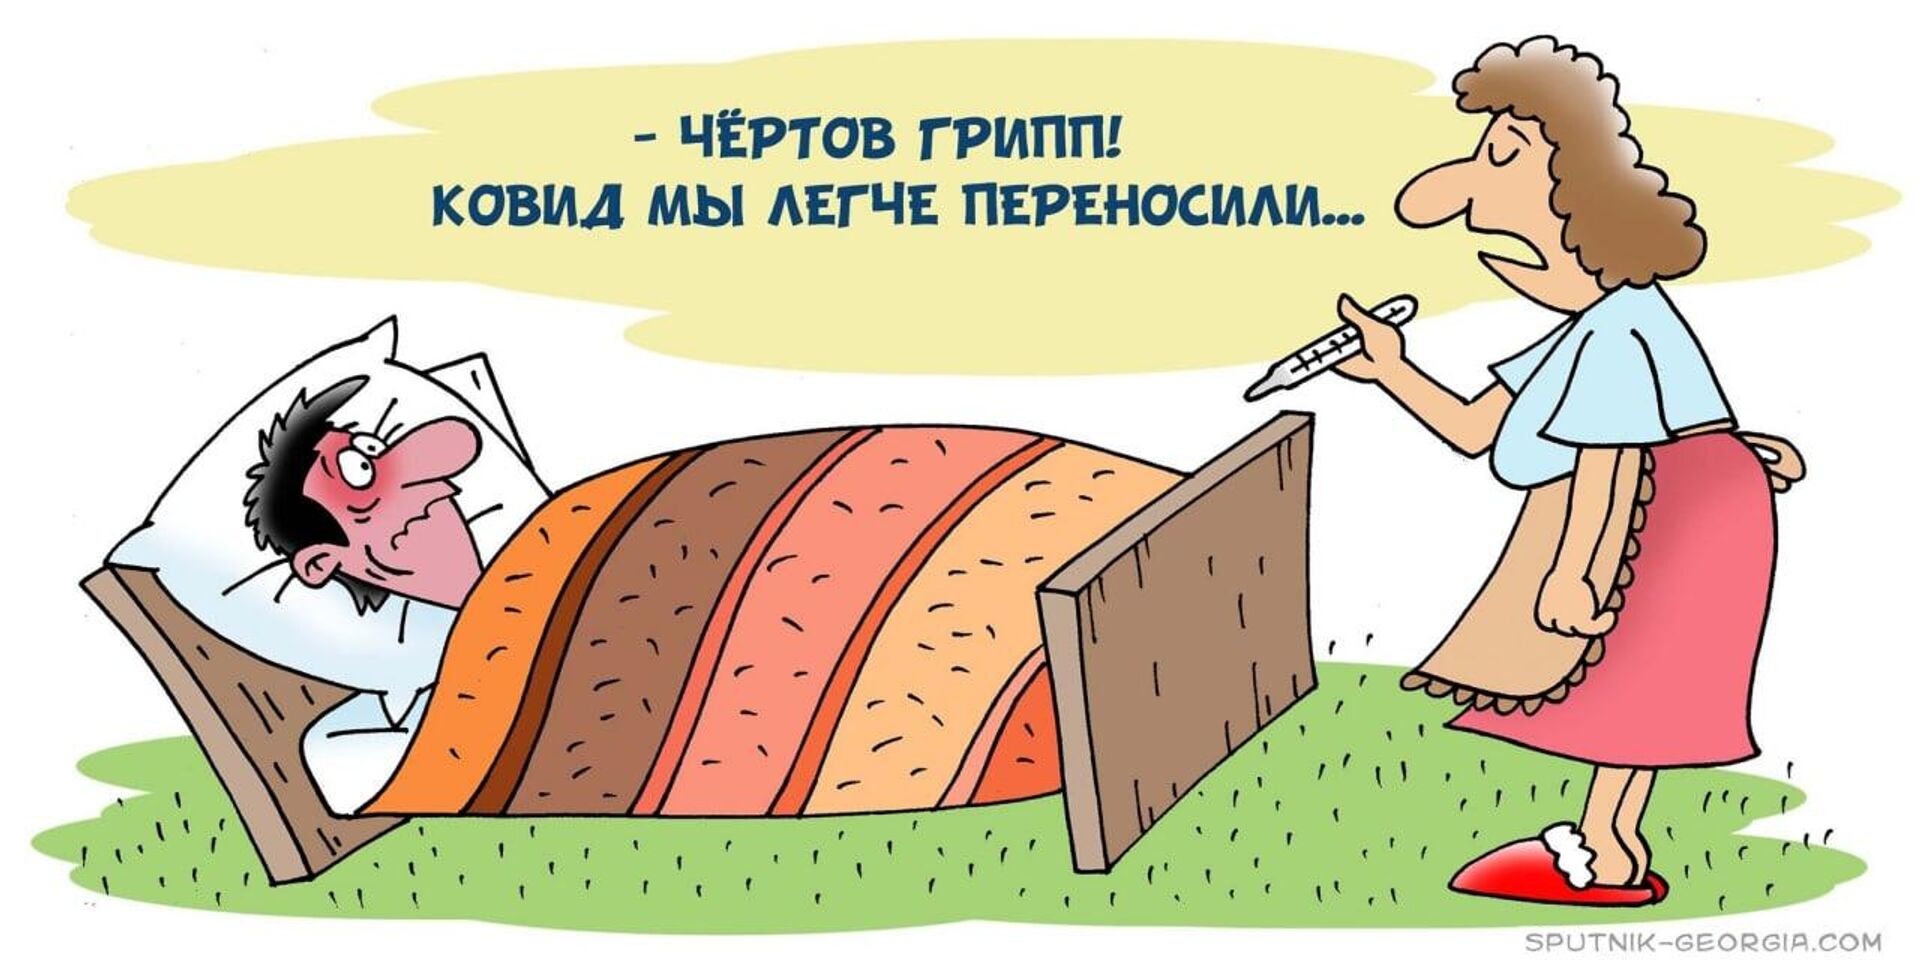 Чертов грипп, или Верните ковид! карикатура - Sputnik Грузия, 1920, 07.12.2022